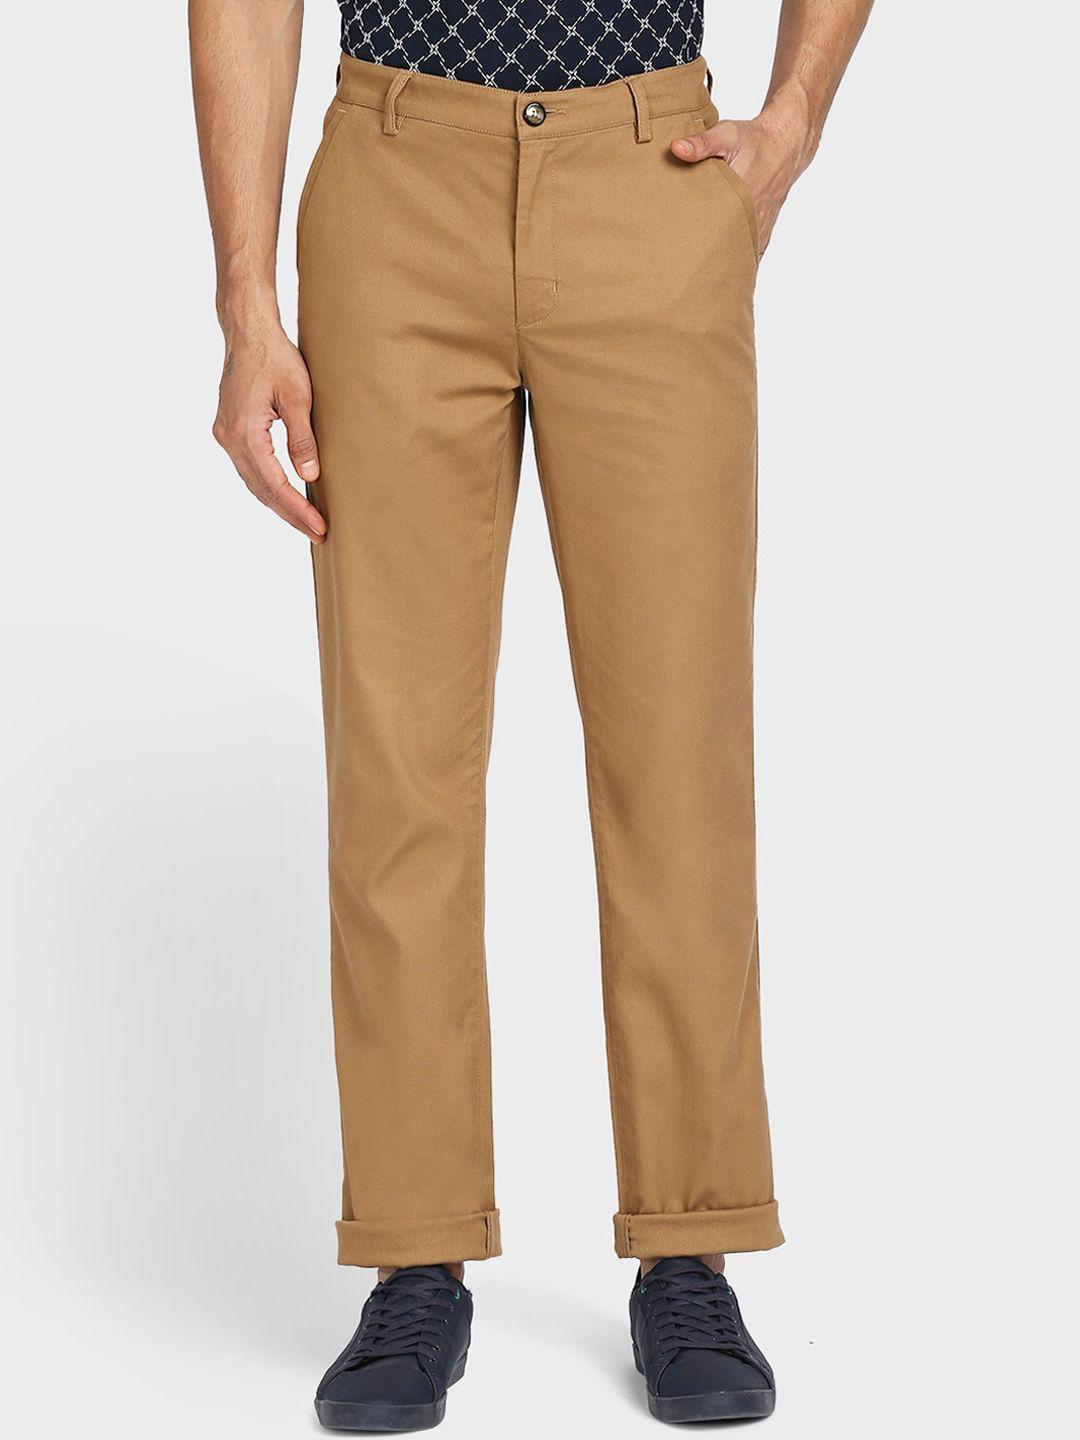 colorplus men brown regular fit chinos trousers